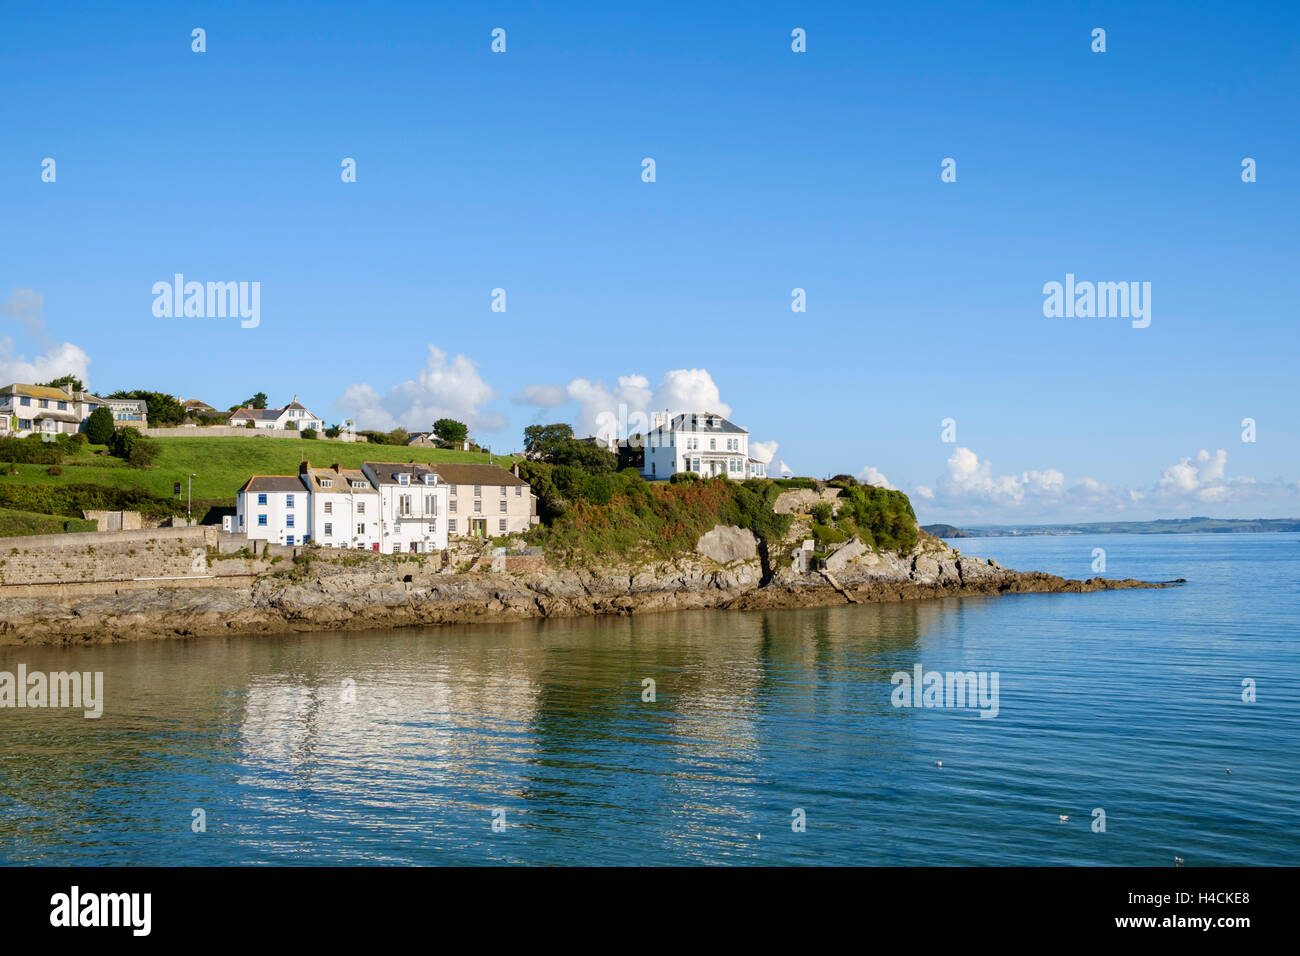 Coastal homes built on rocks overlooking the sea at Portmellon, Cornwall, England, UK Stock Photo